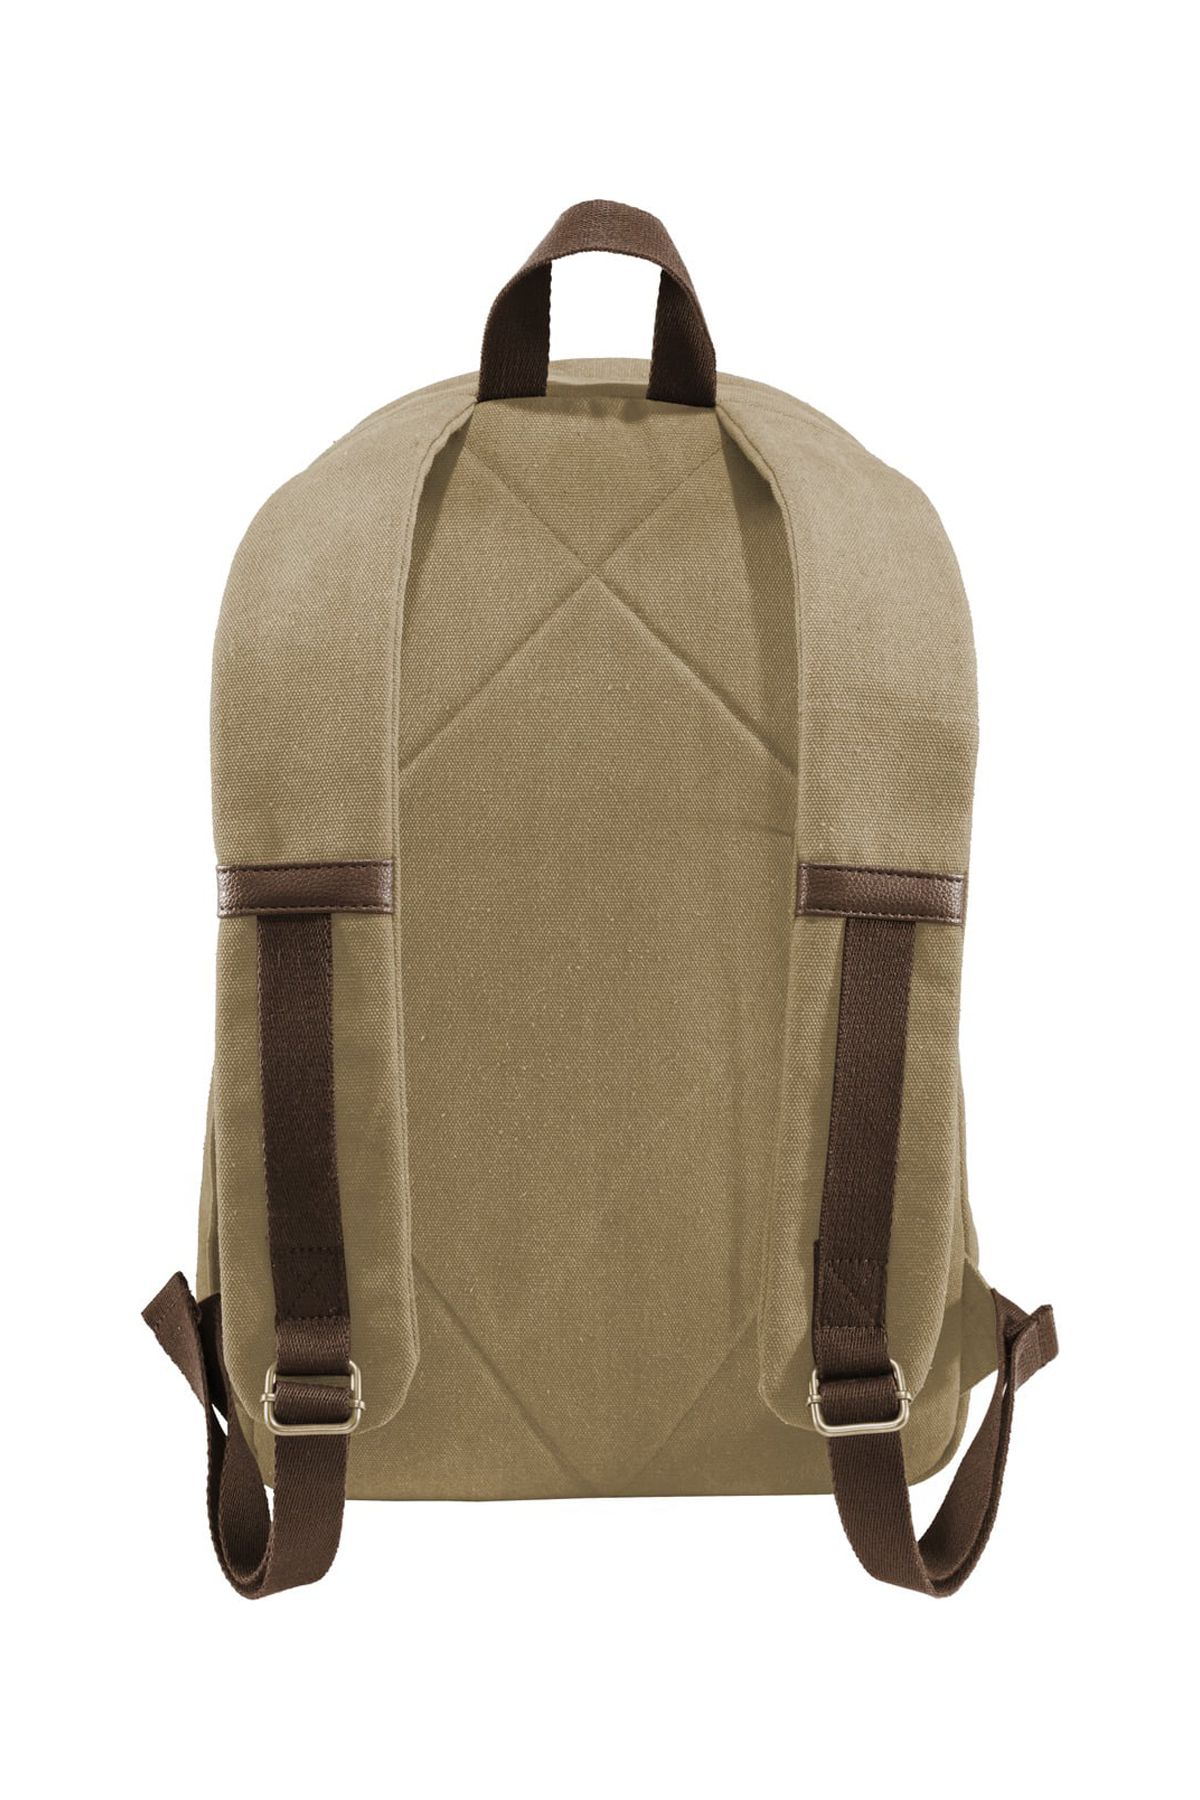 Port Authority Adult Unisex canvas Backpack Desert Khaki One Size Fits All - image 3 of 3